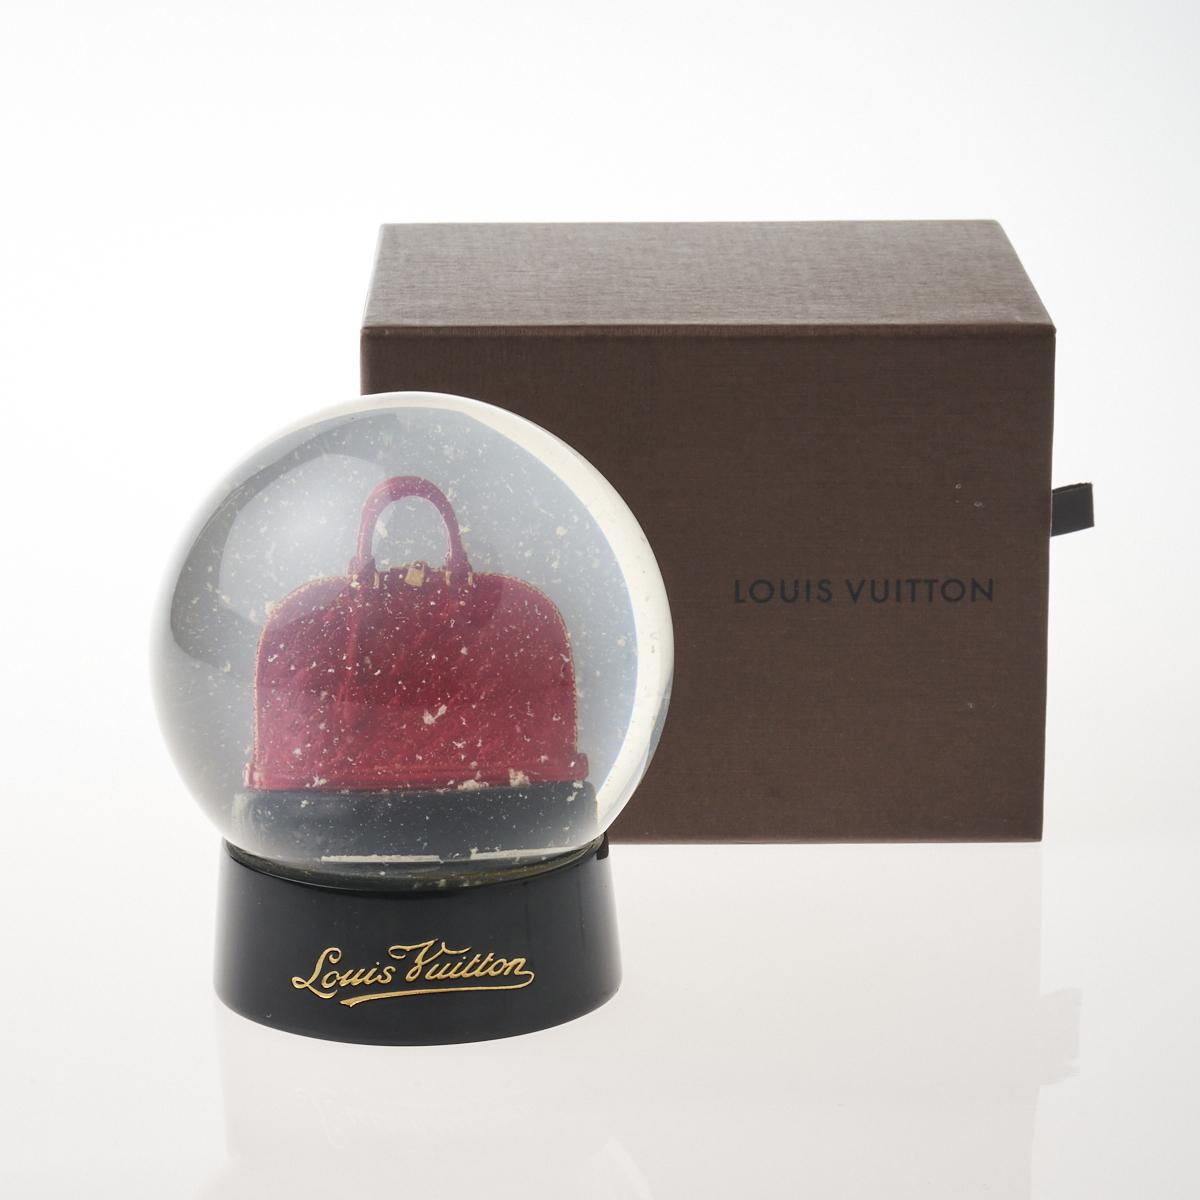 Sold at Auction: Louis Vuitton, LOUIS VUITTON Snow Globe ALMA.